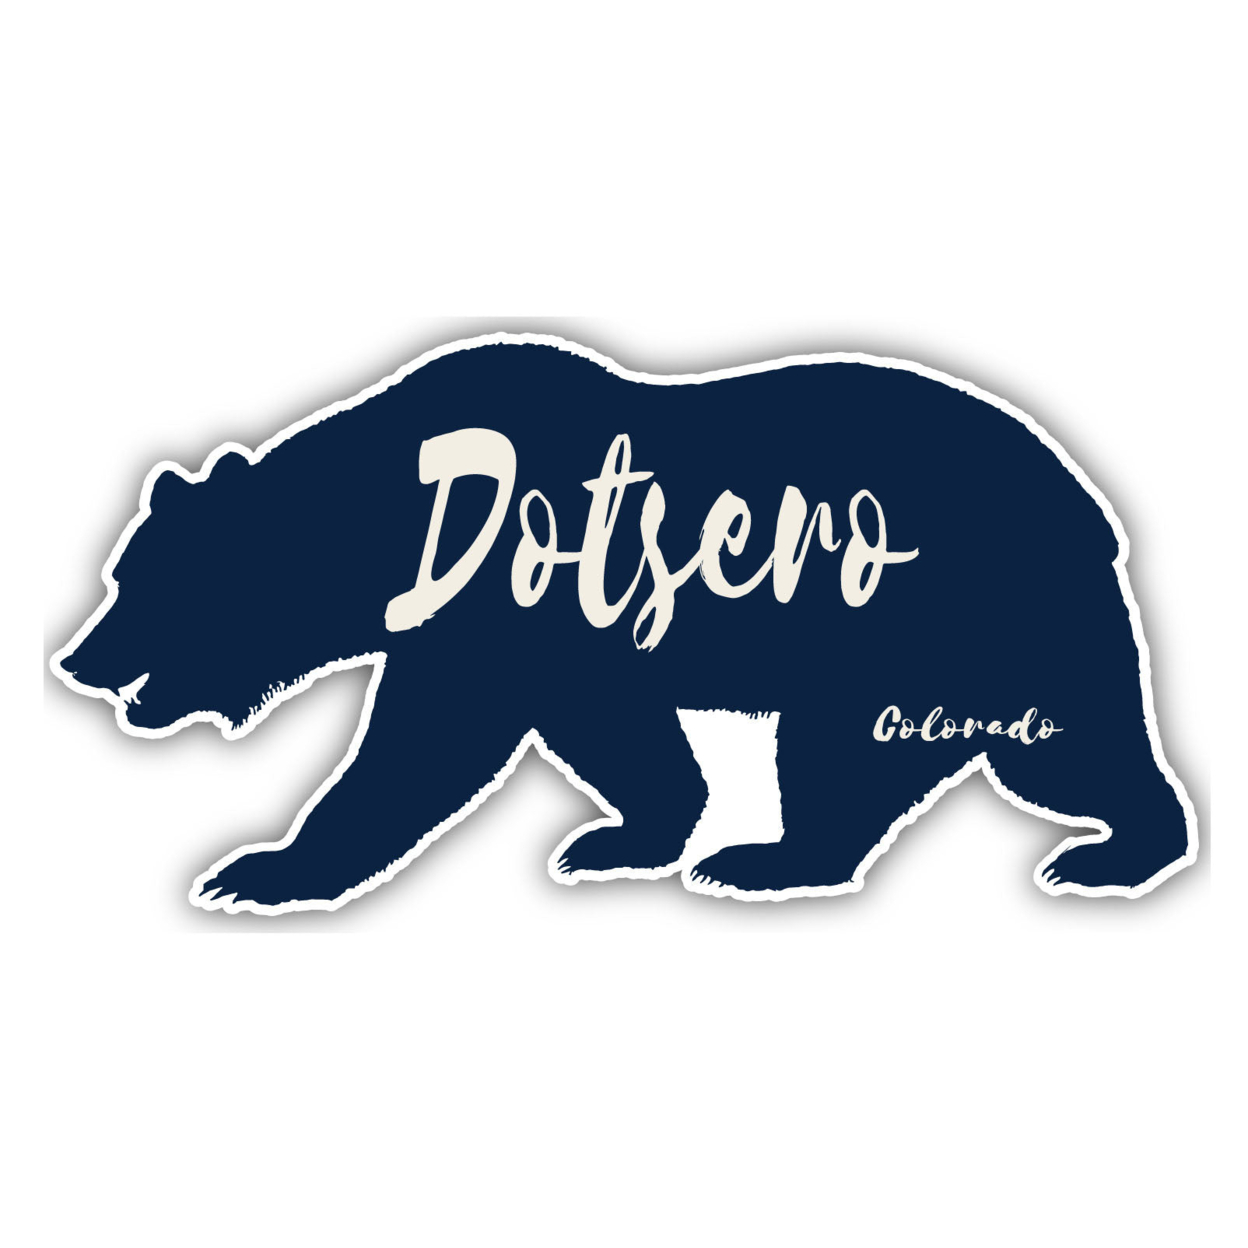 Dotsero Colorado Souvenir Decorative Stickers (Choose Theme And Size) - 4-Pack, 10-Inch, Bear